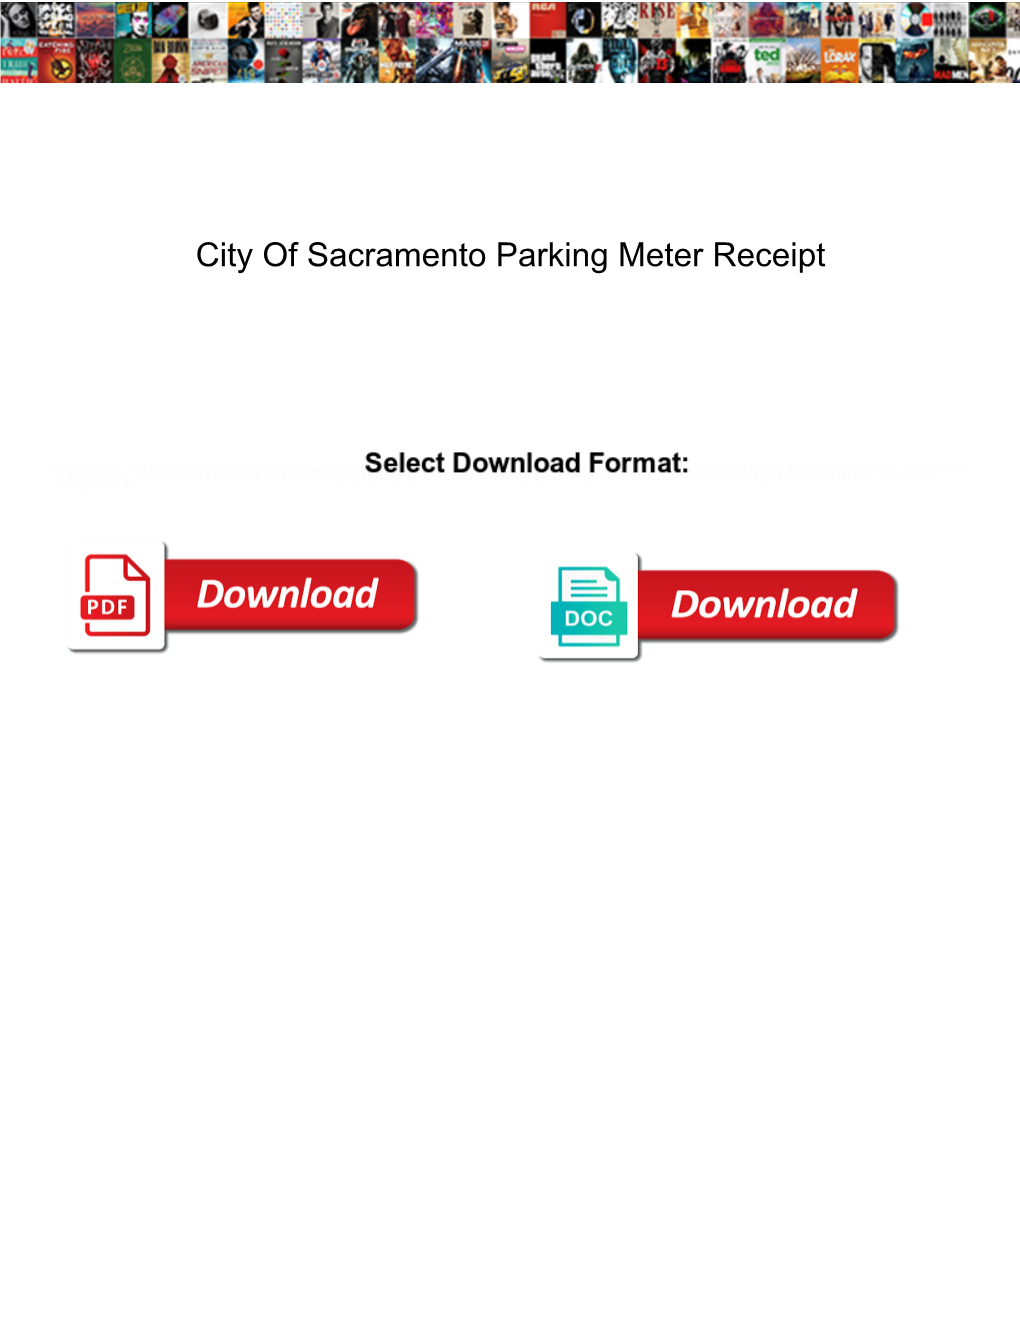 City of Sacramento Parking Meter Receipt